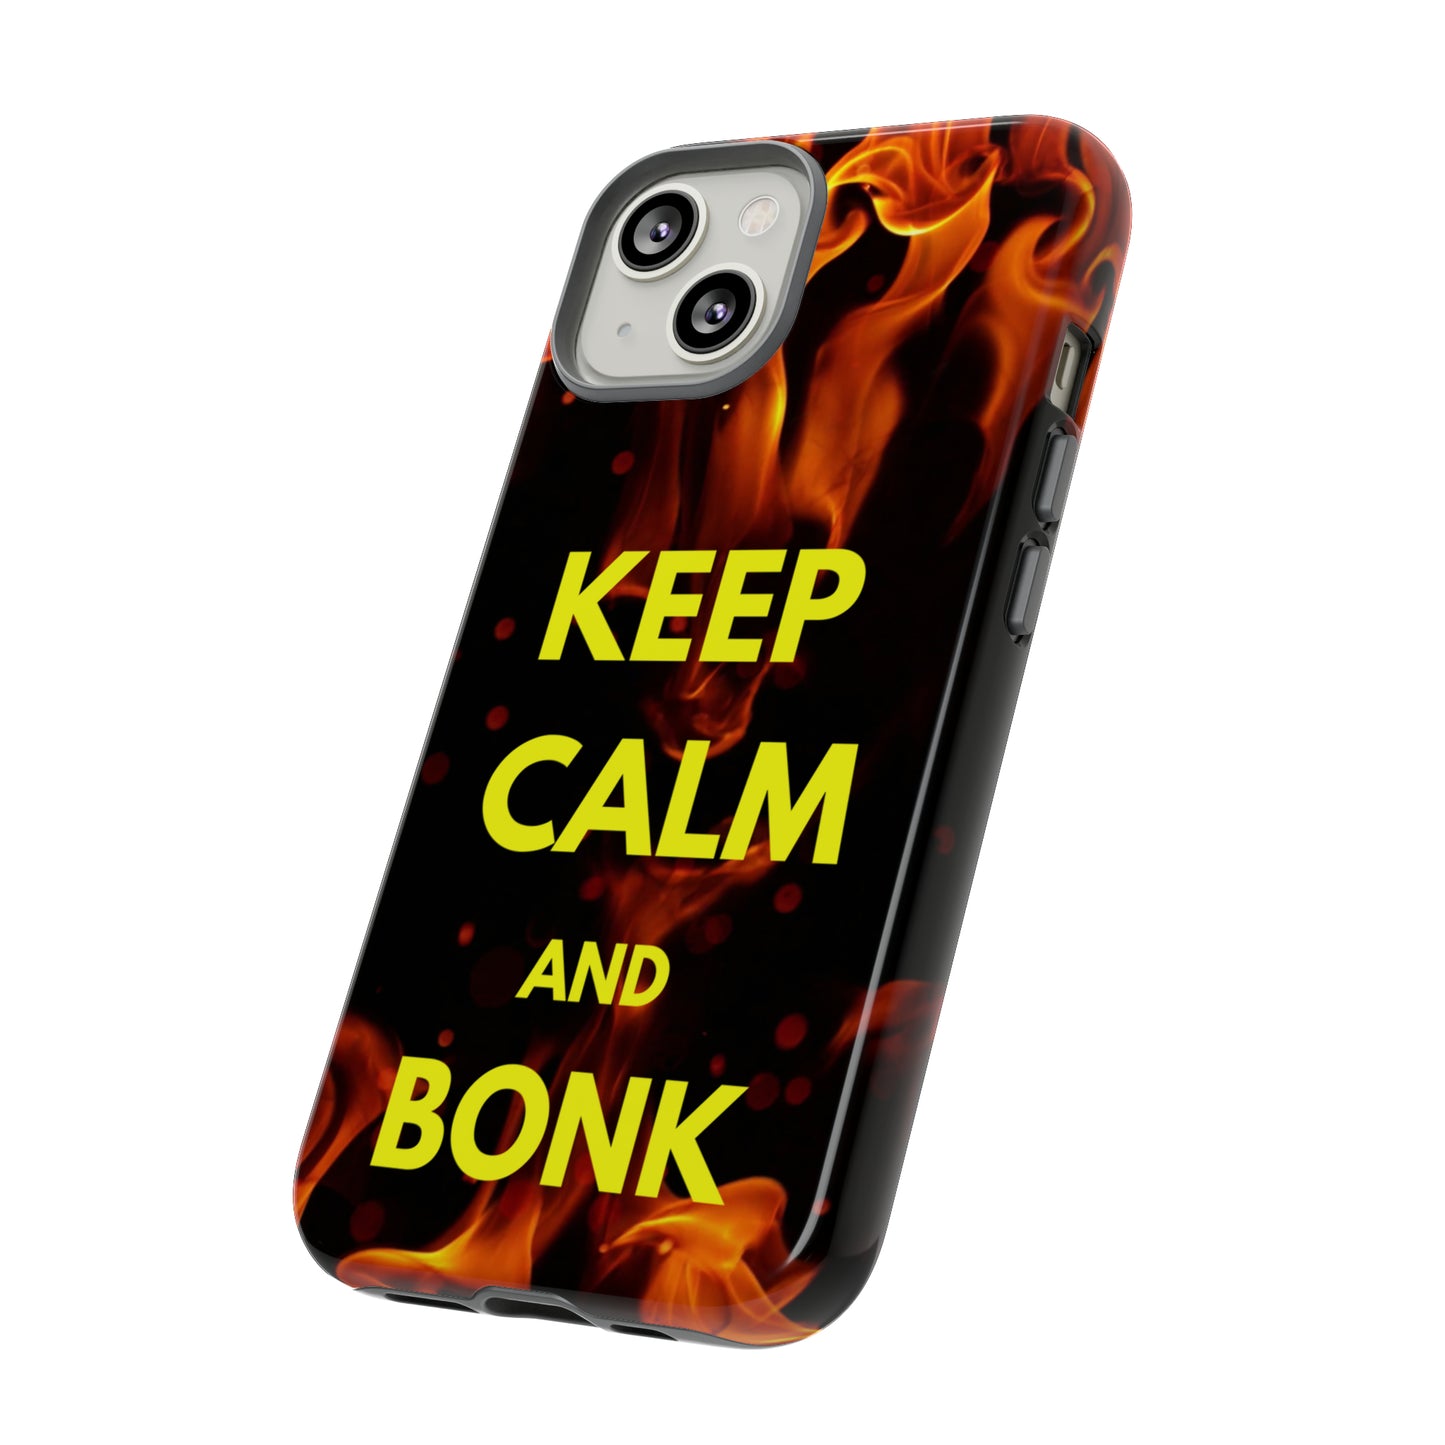 Keep Calm and Bonk Destiny 2 Themed Phone Case